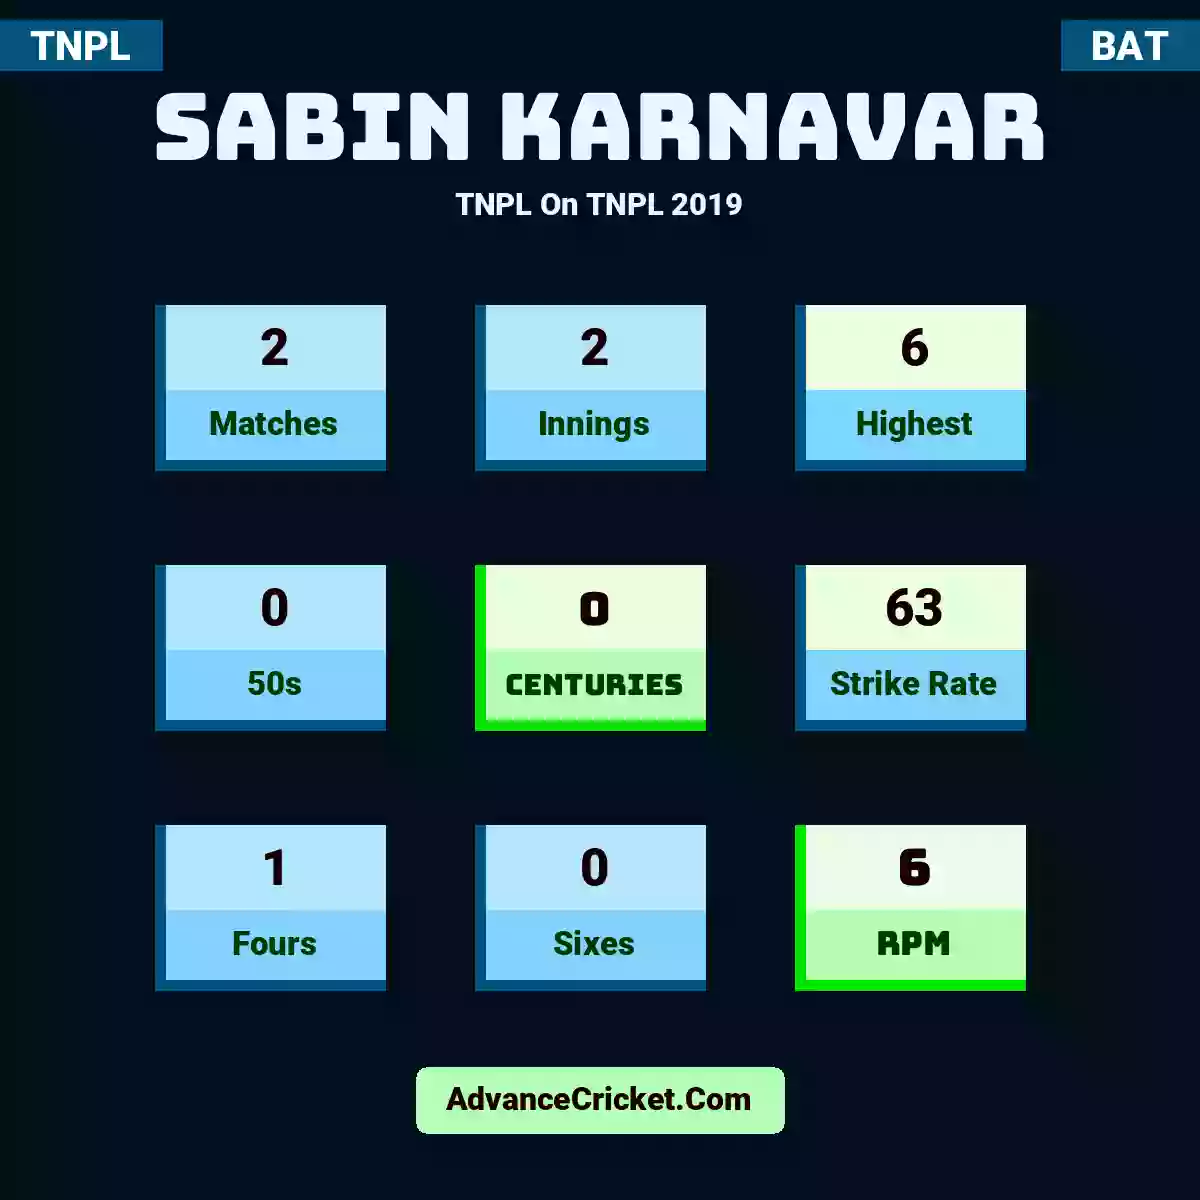 Sabin Karnavar TNPL  On TNPL 2019, Sabin Karnavar played 2 matches, scored 6 runs as highest, 0 half-centuries, and 0 centuries, with a strike rate of 63. S.Karnavar hit 1 fours and 0 sixes, with an RPM of 6.